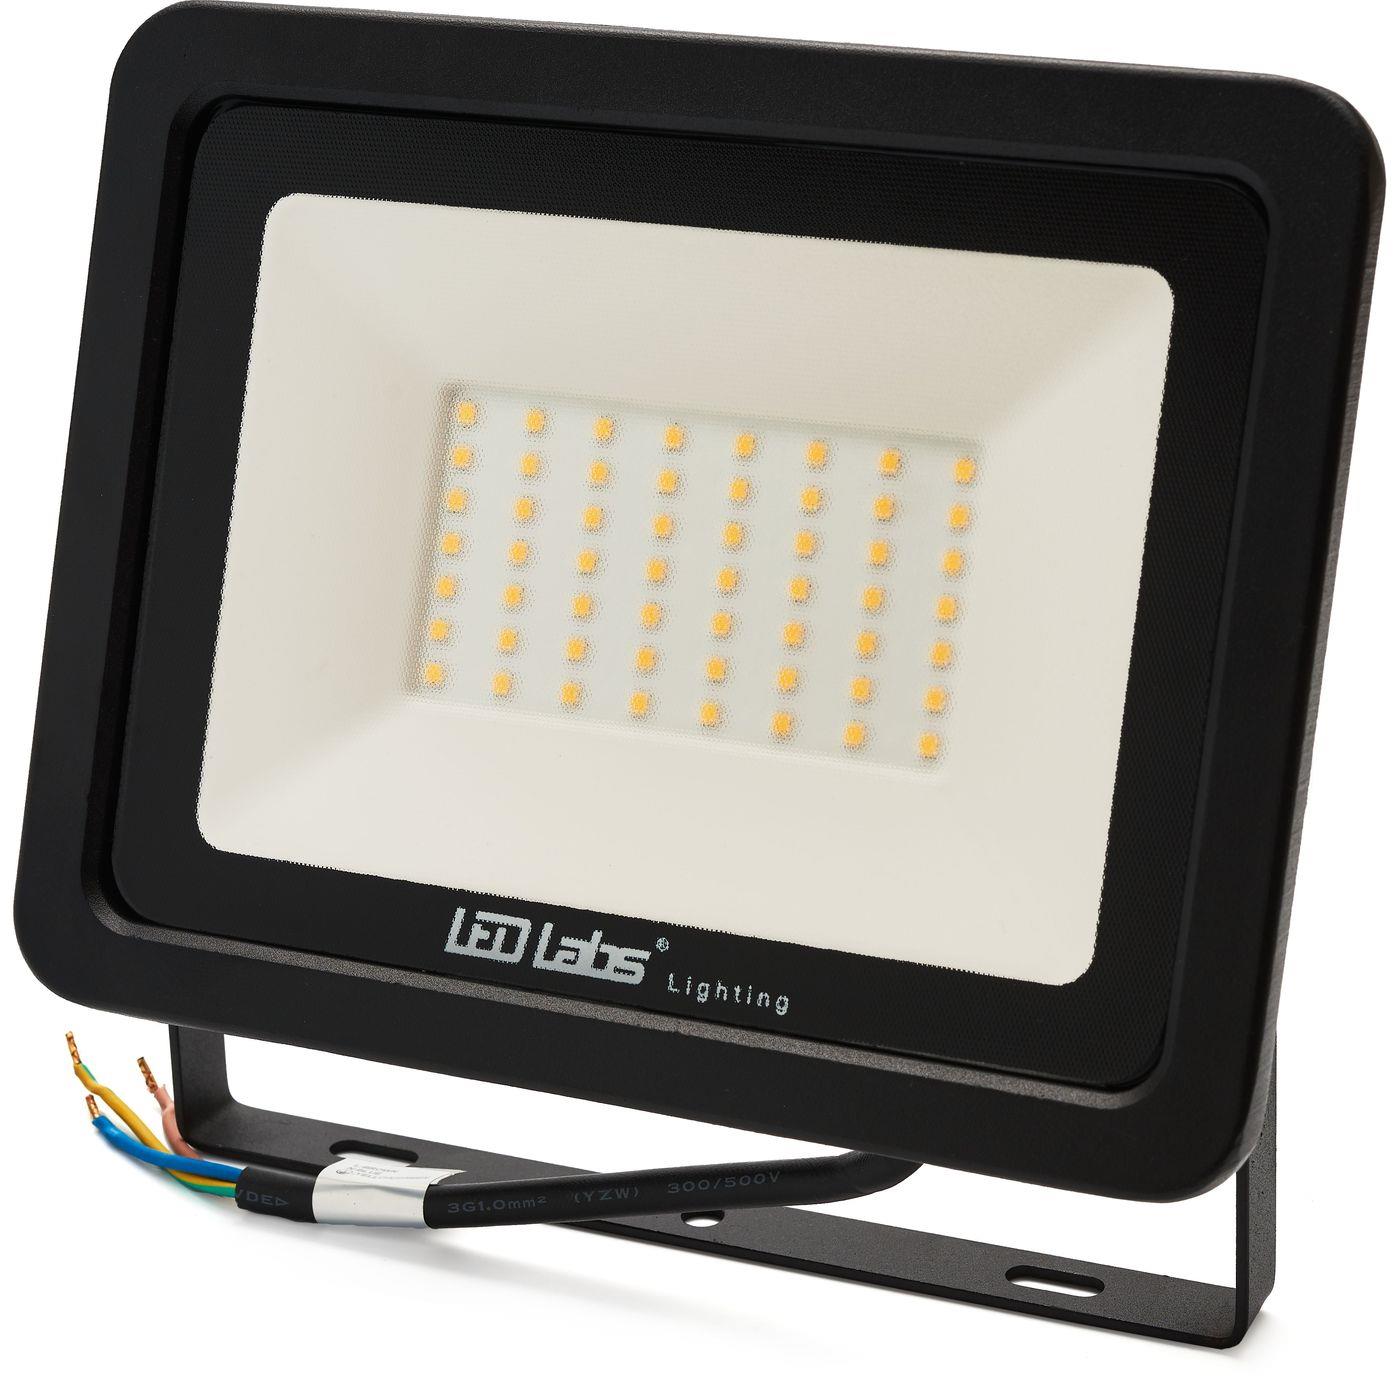 LED Floodlight Spotlight 50W 4250lm Neutral White 4000K 205x160x31mm Black -35...+55°C IP65 110° CRI 80+